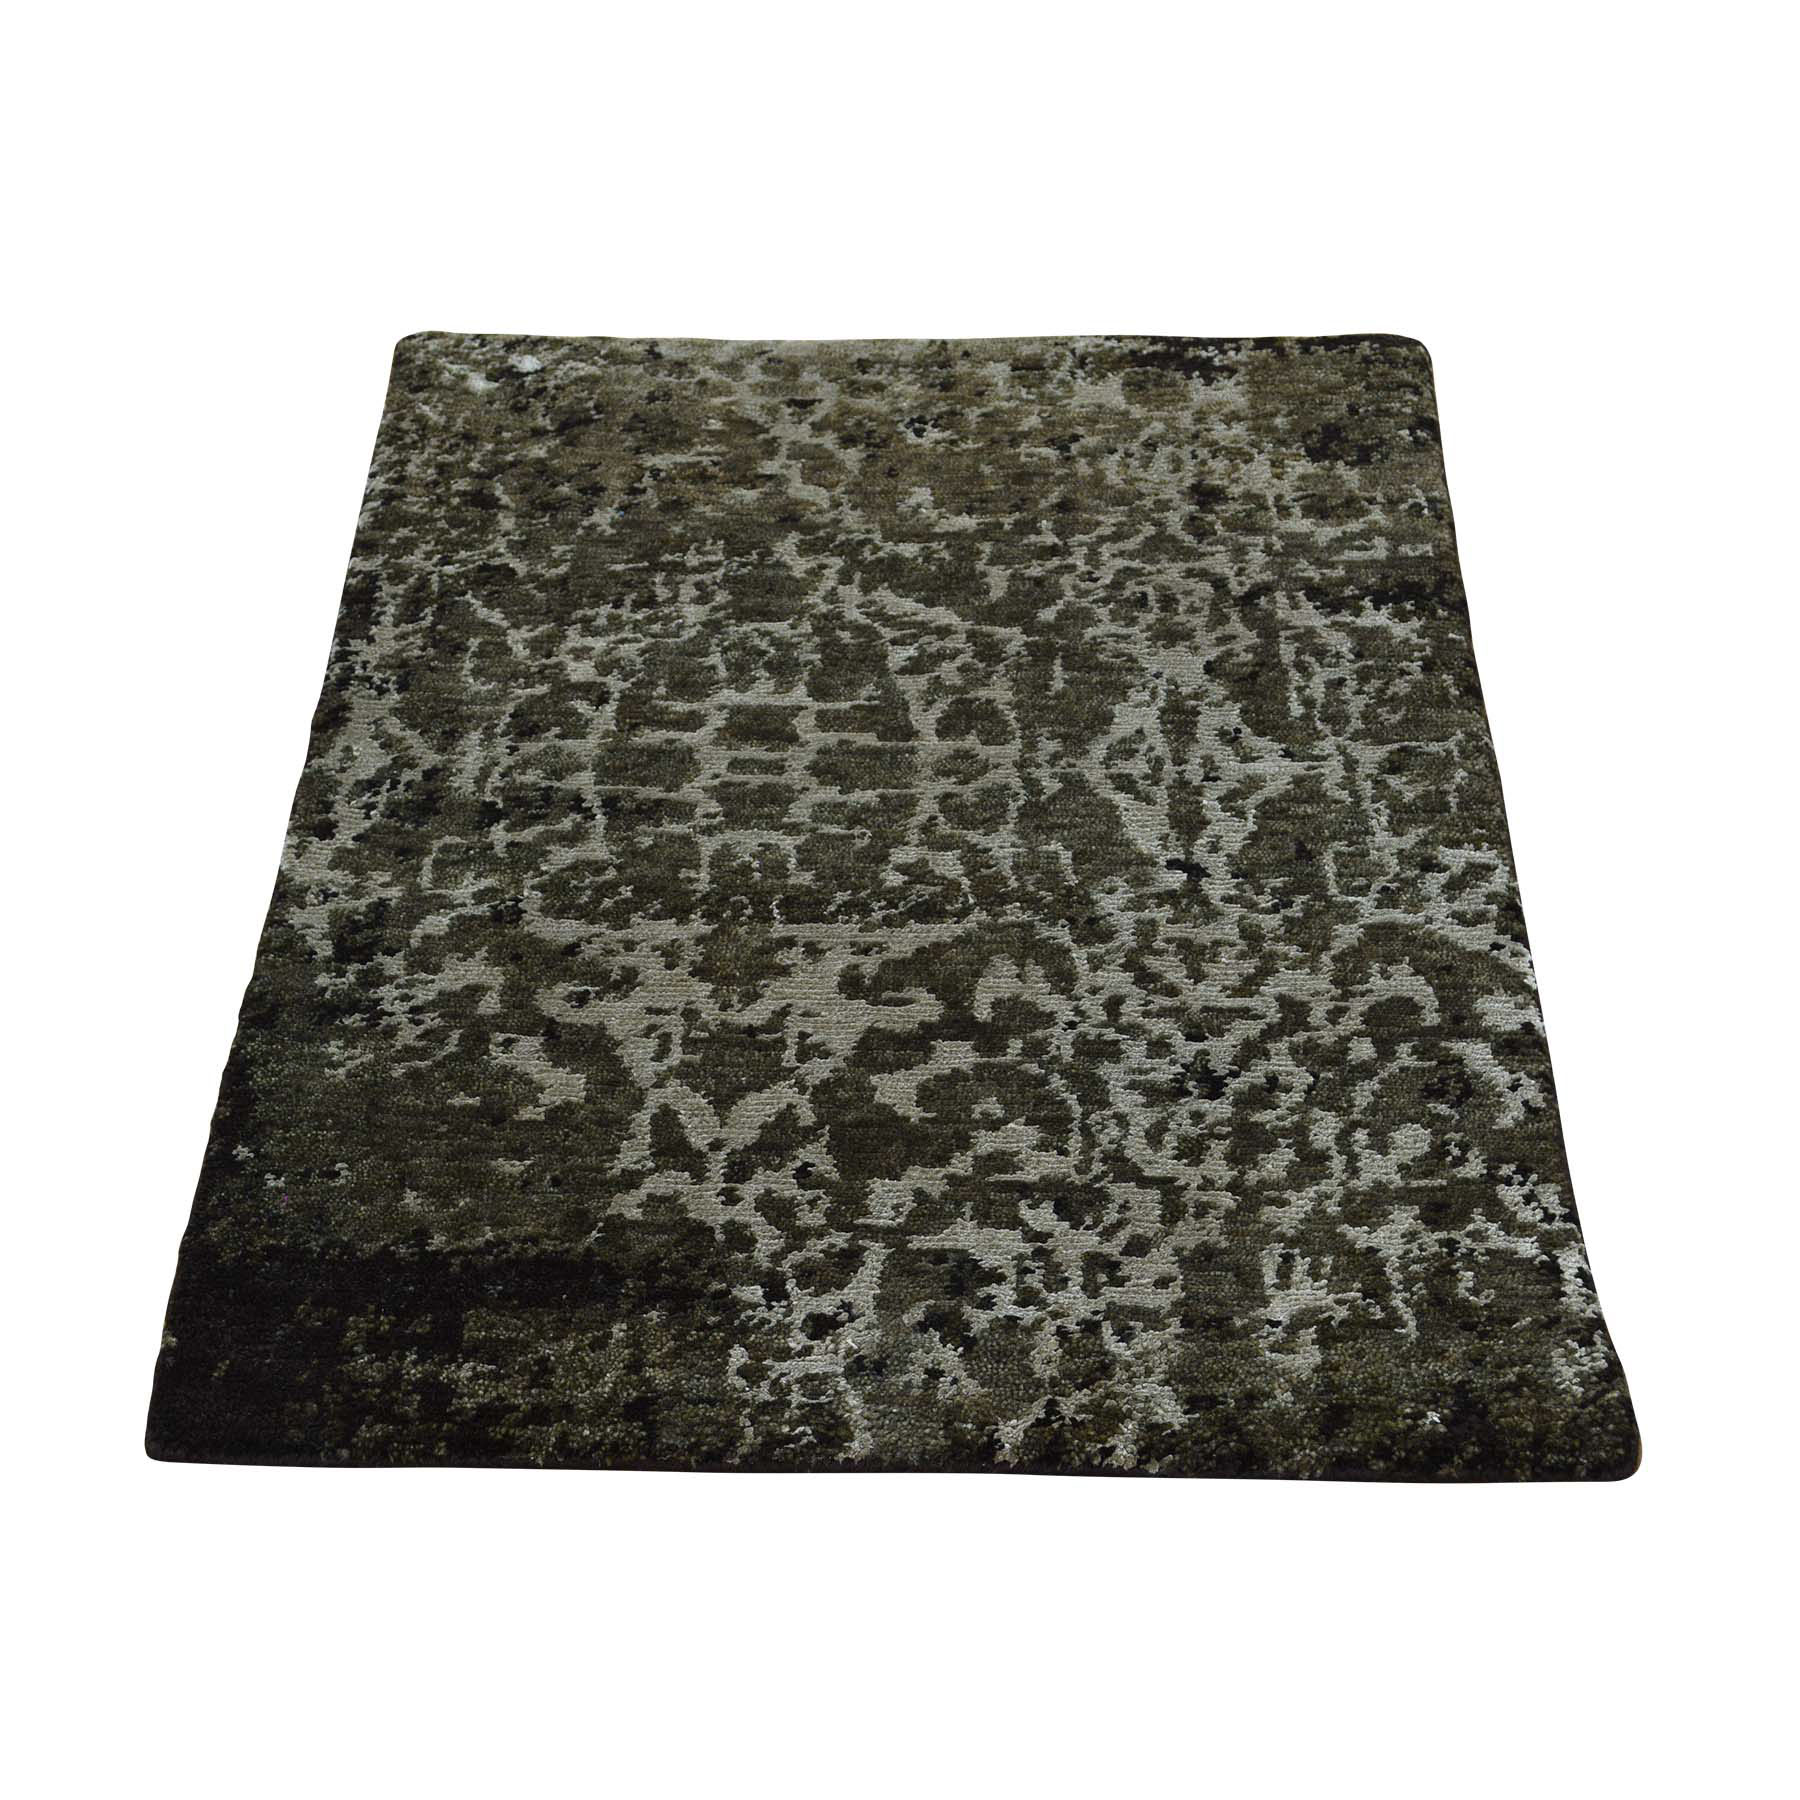 2'x2'9" Black Modern Wool and Silk Hand Woven Abstract Design Oriental Rug 